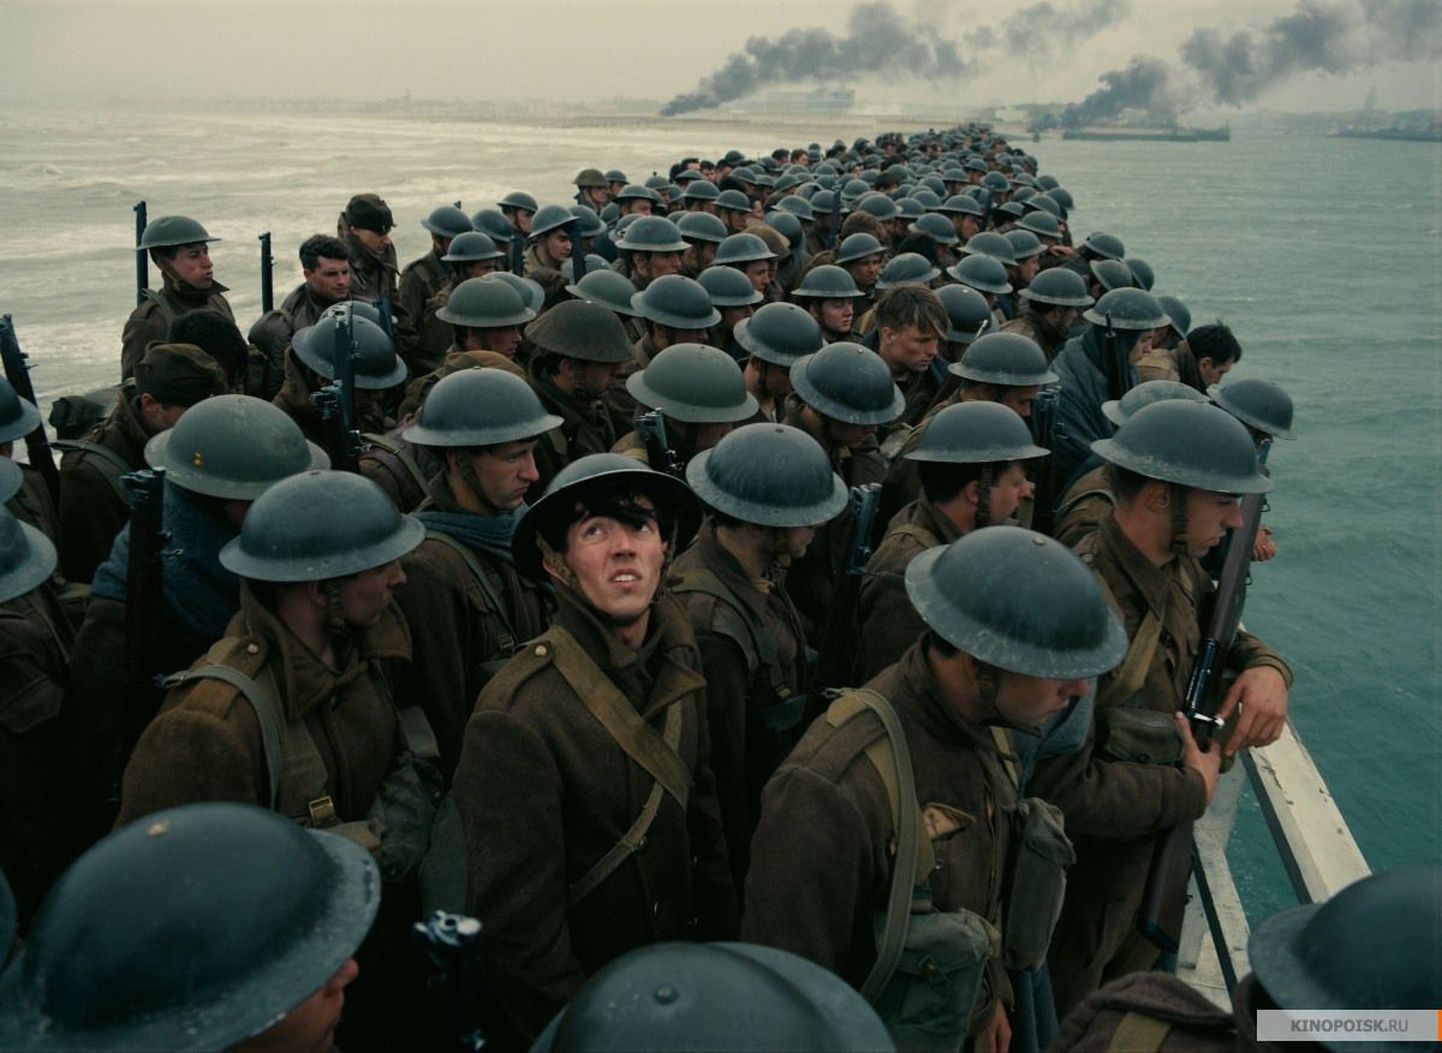 Кадр из фильма "Дюнкерк".